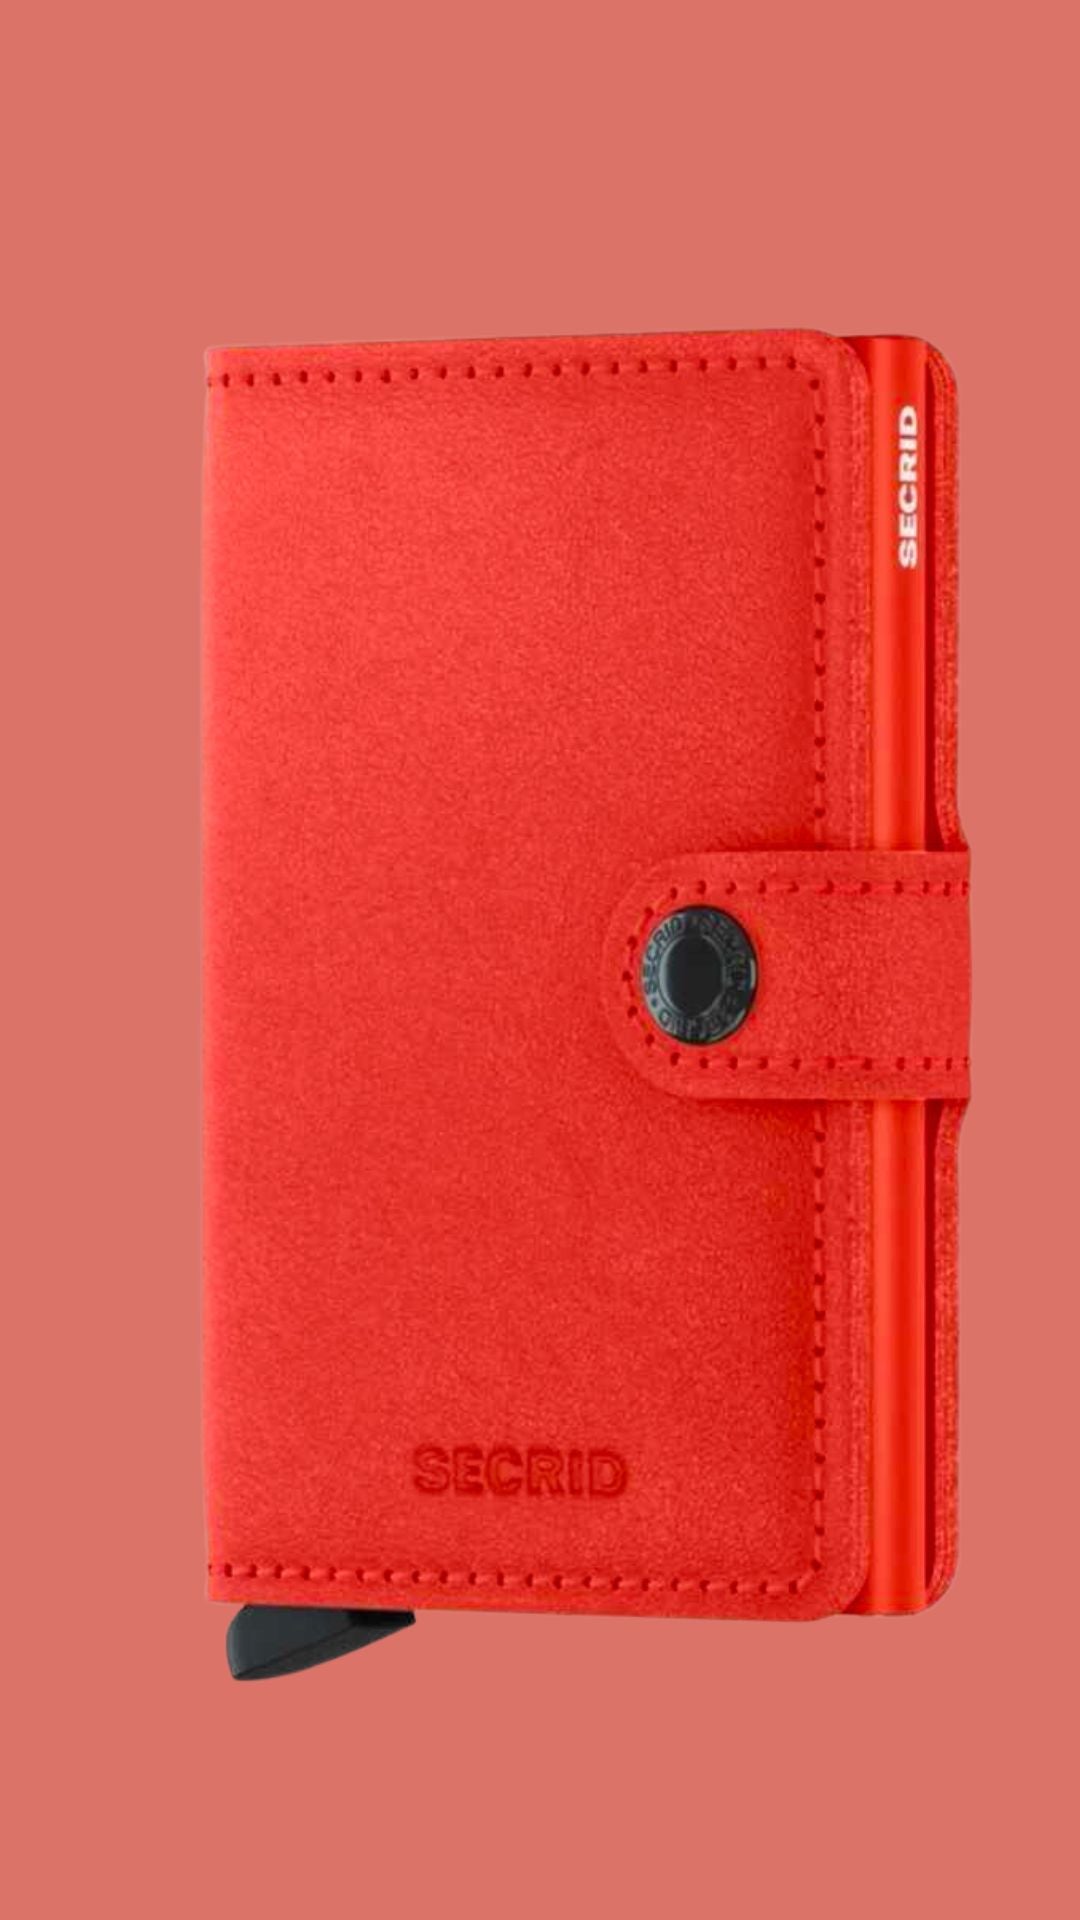 Secrid Miniwallet portemonnee in oranje